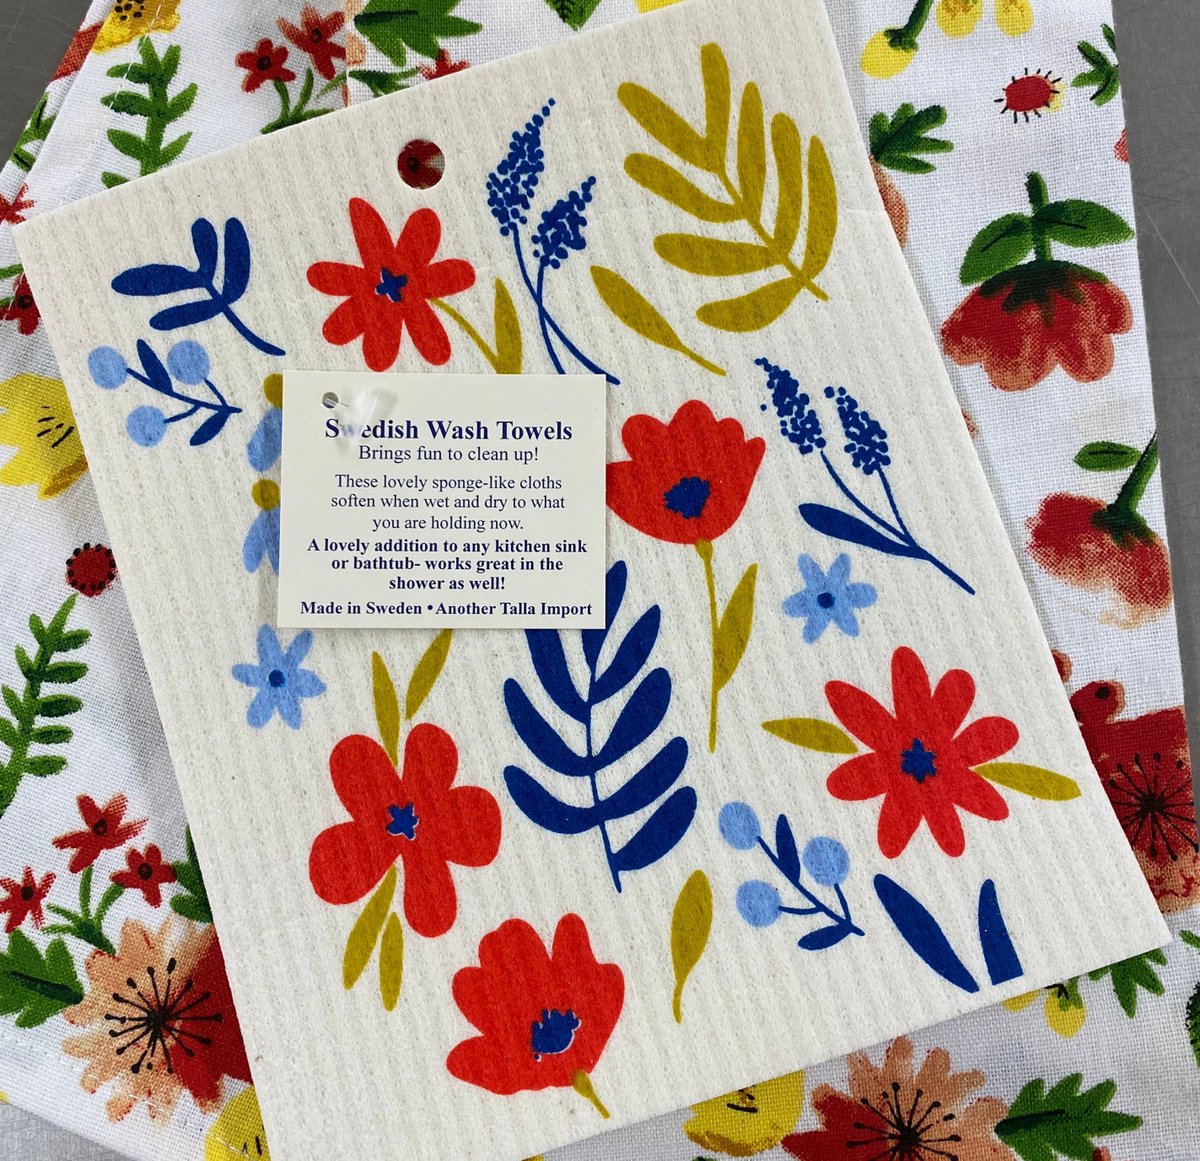 Floral print, eco-friendly, reusable, Swedish dishcloth. What's not to love? #floralprint #swedishwashtowels #ecofriendlykitchen